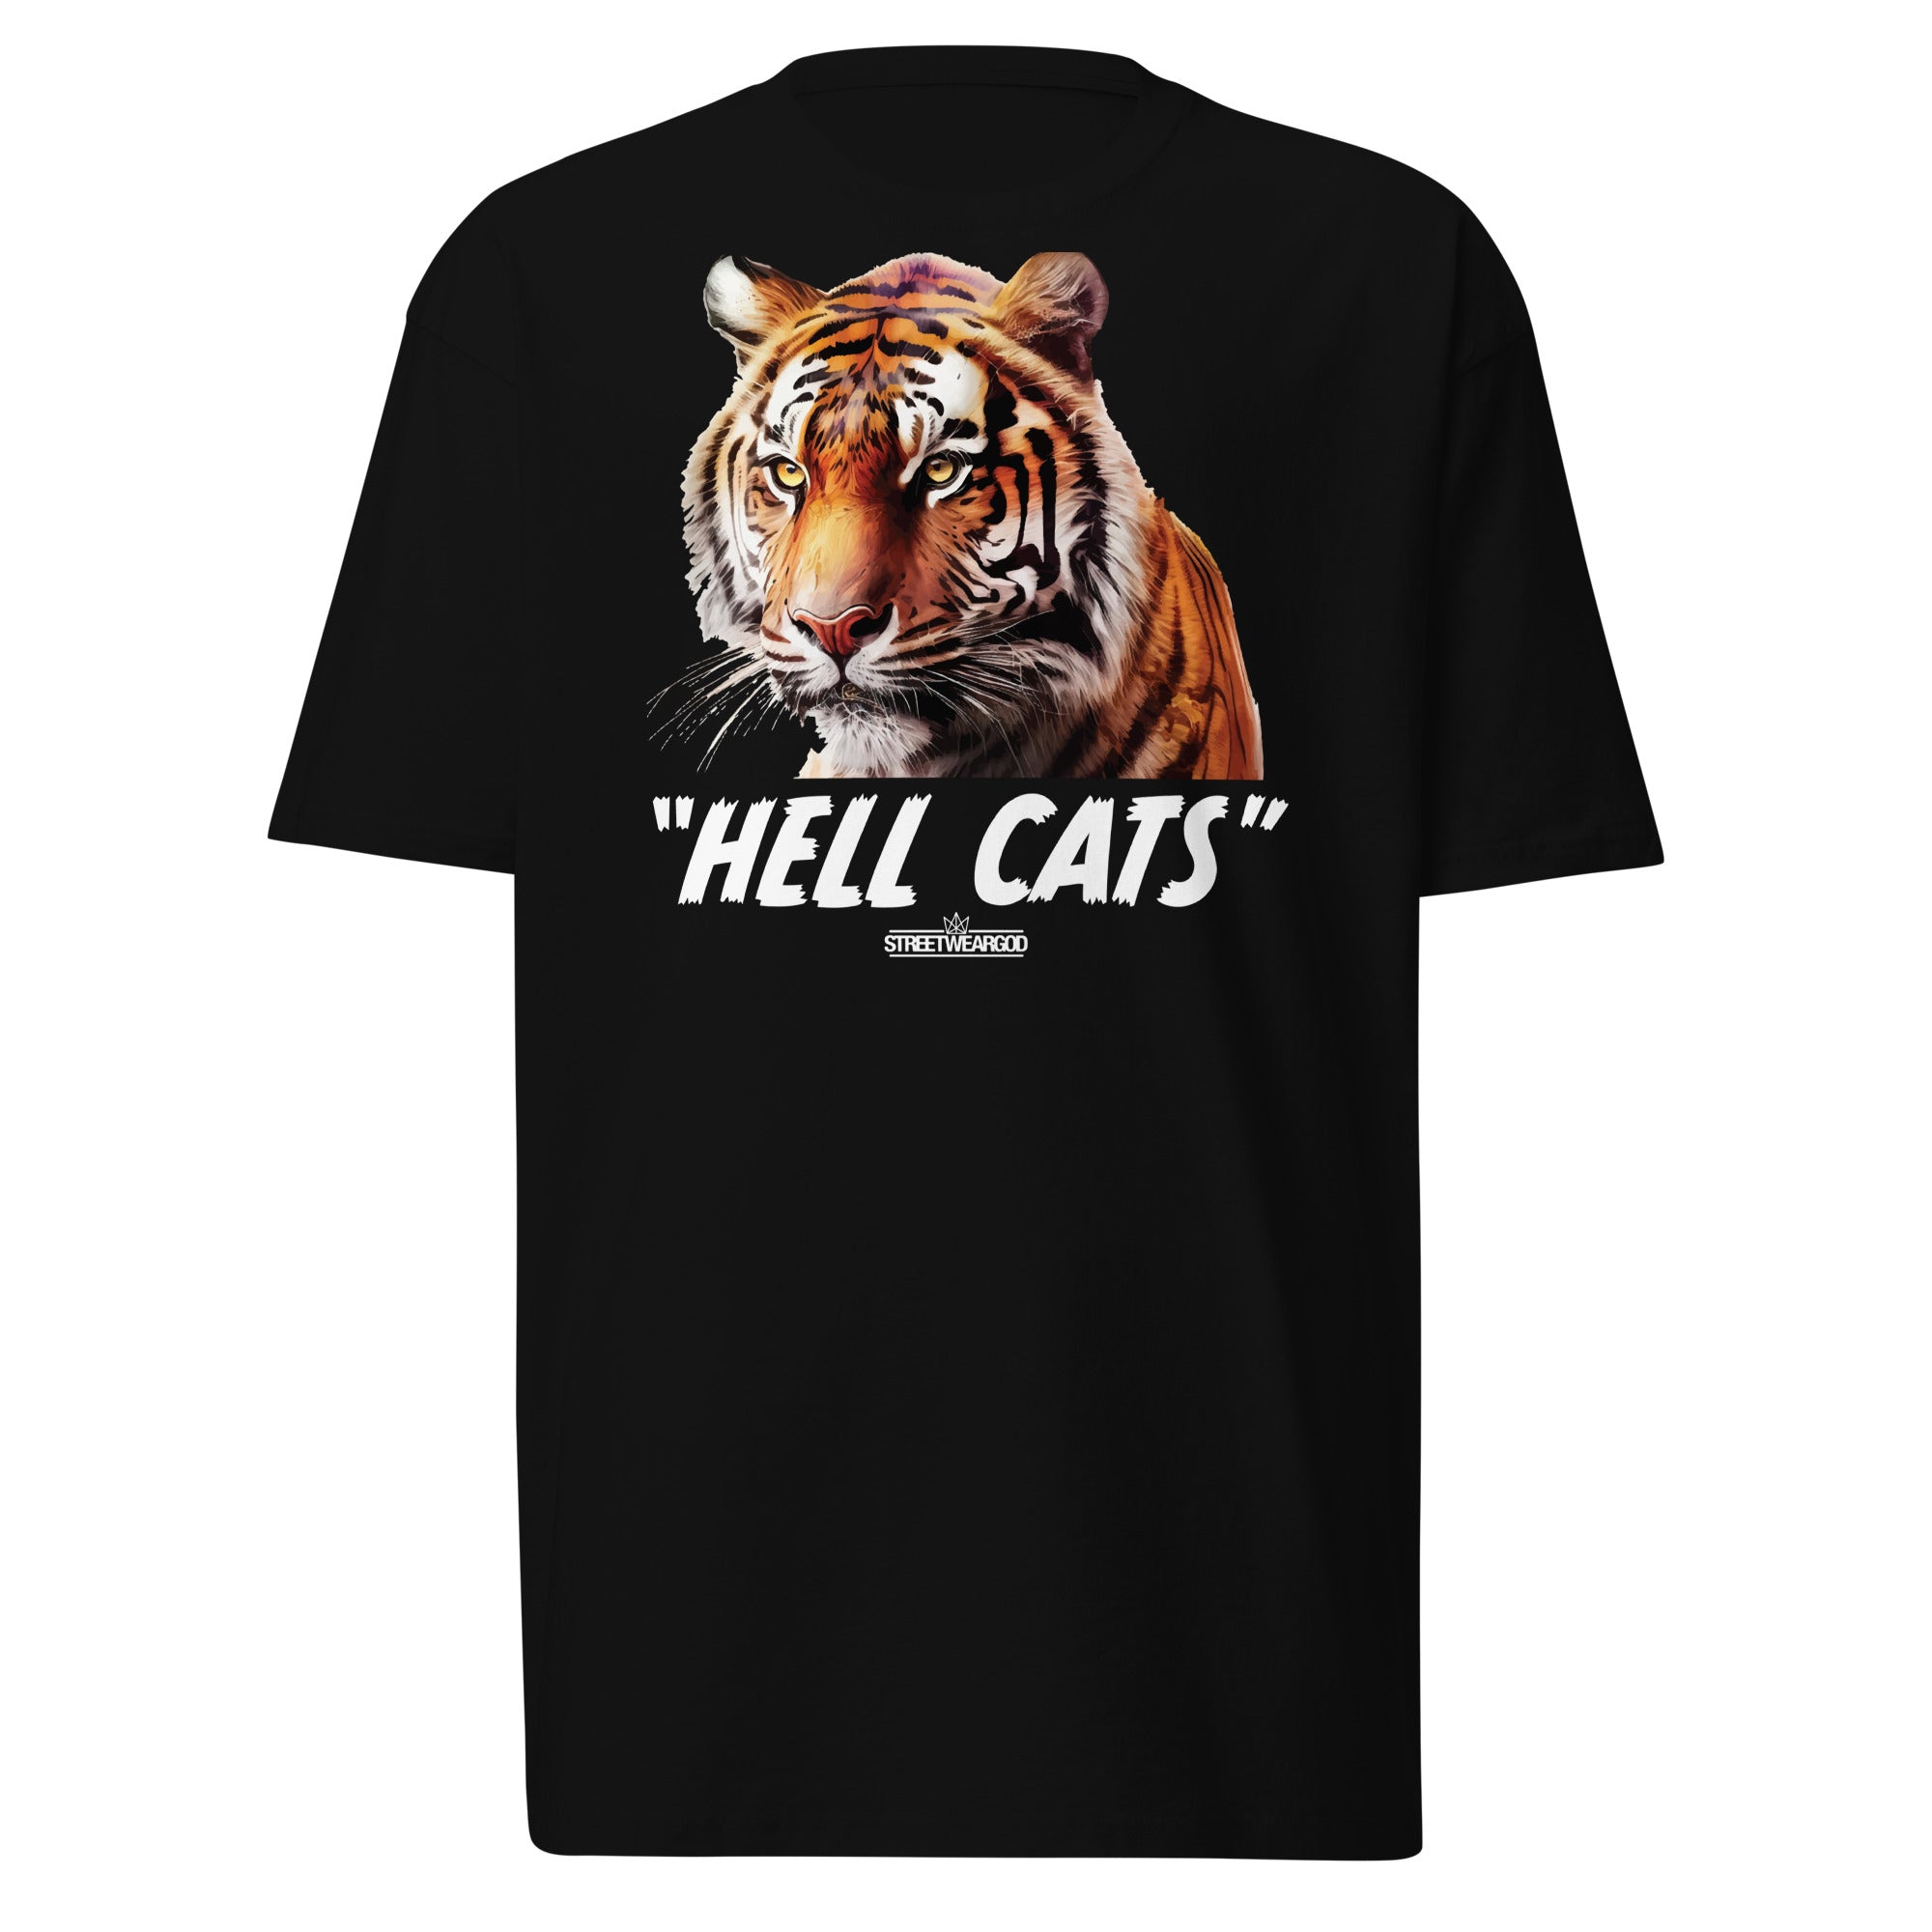 Hell cats black premium heavyweight tee